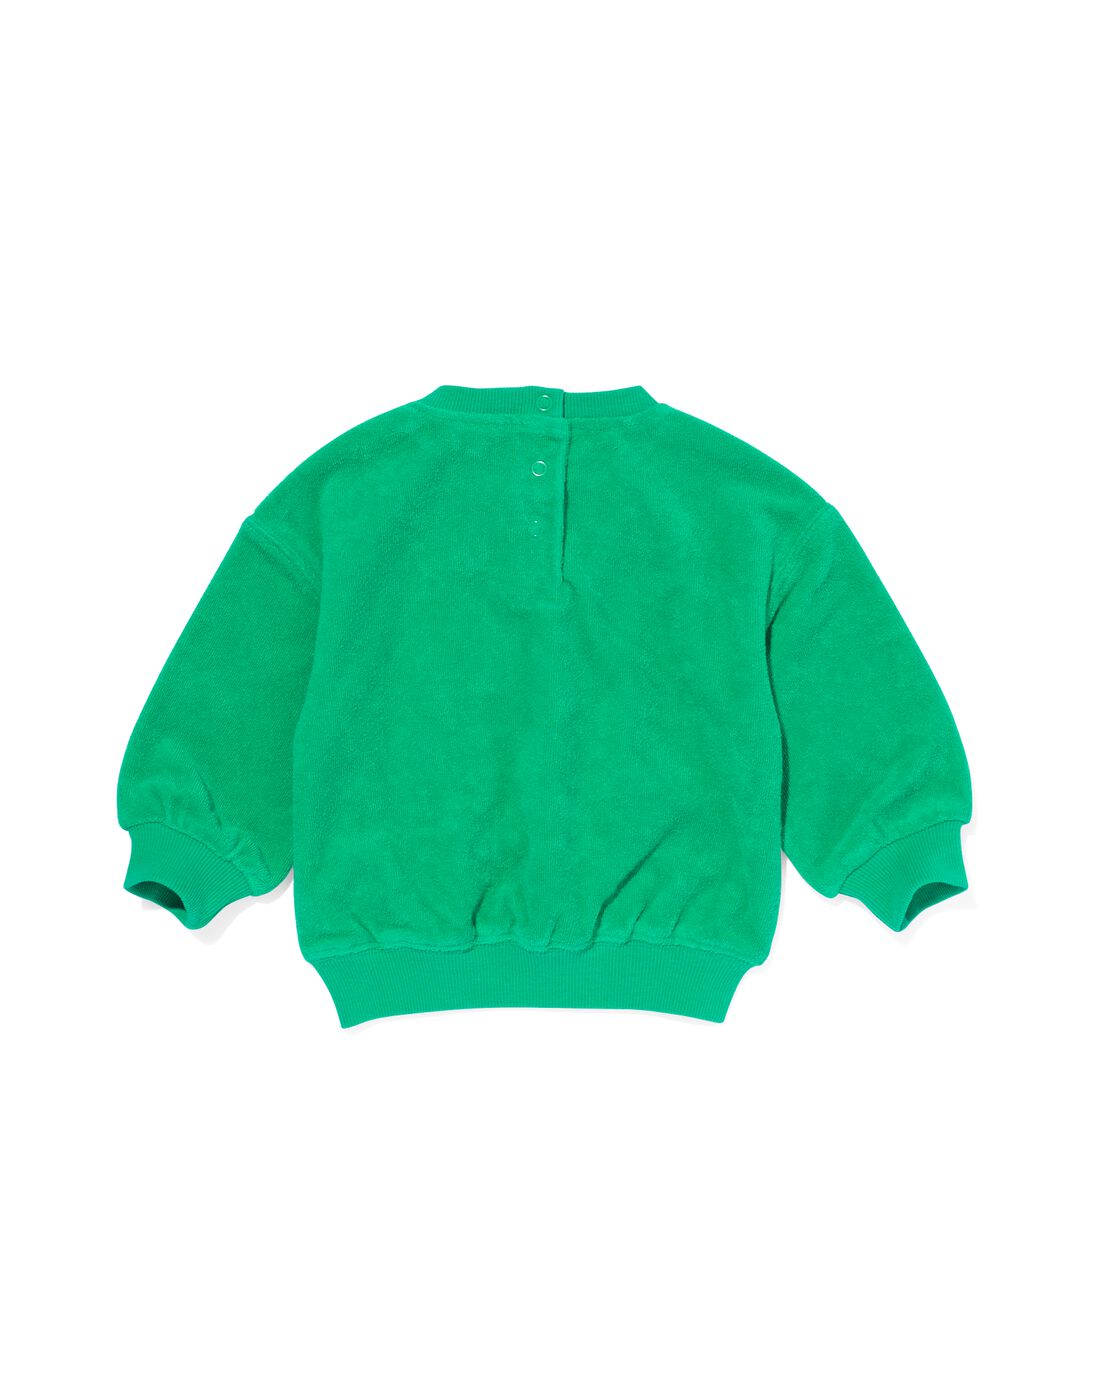 HEMA Baby Sweater Gezichtje Groen (groen)